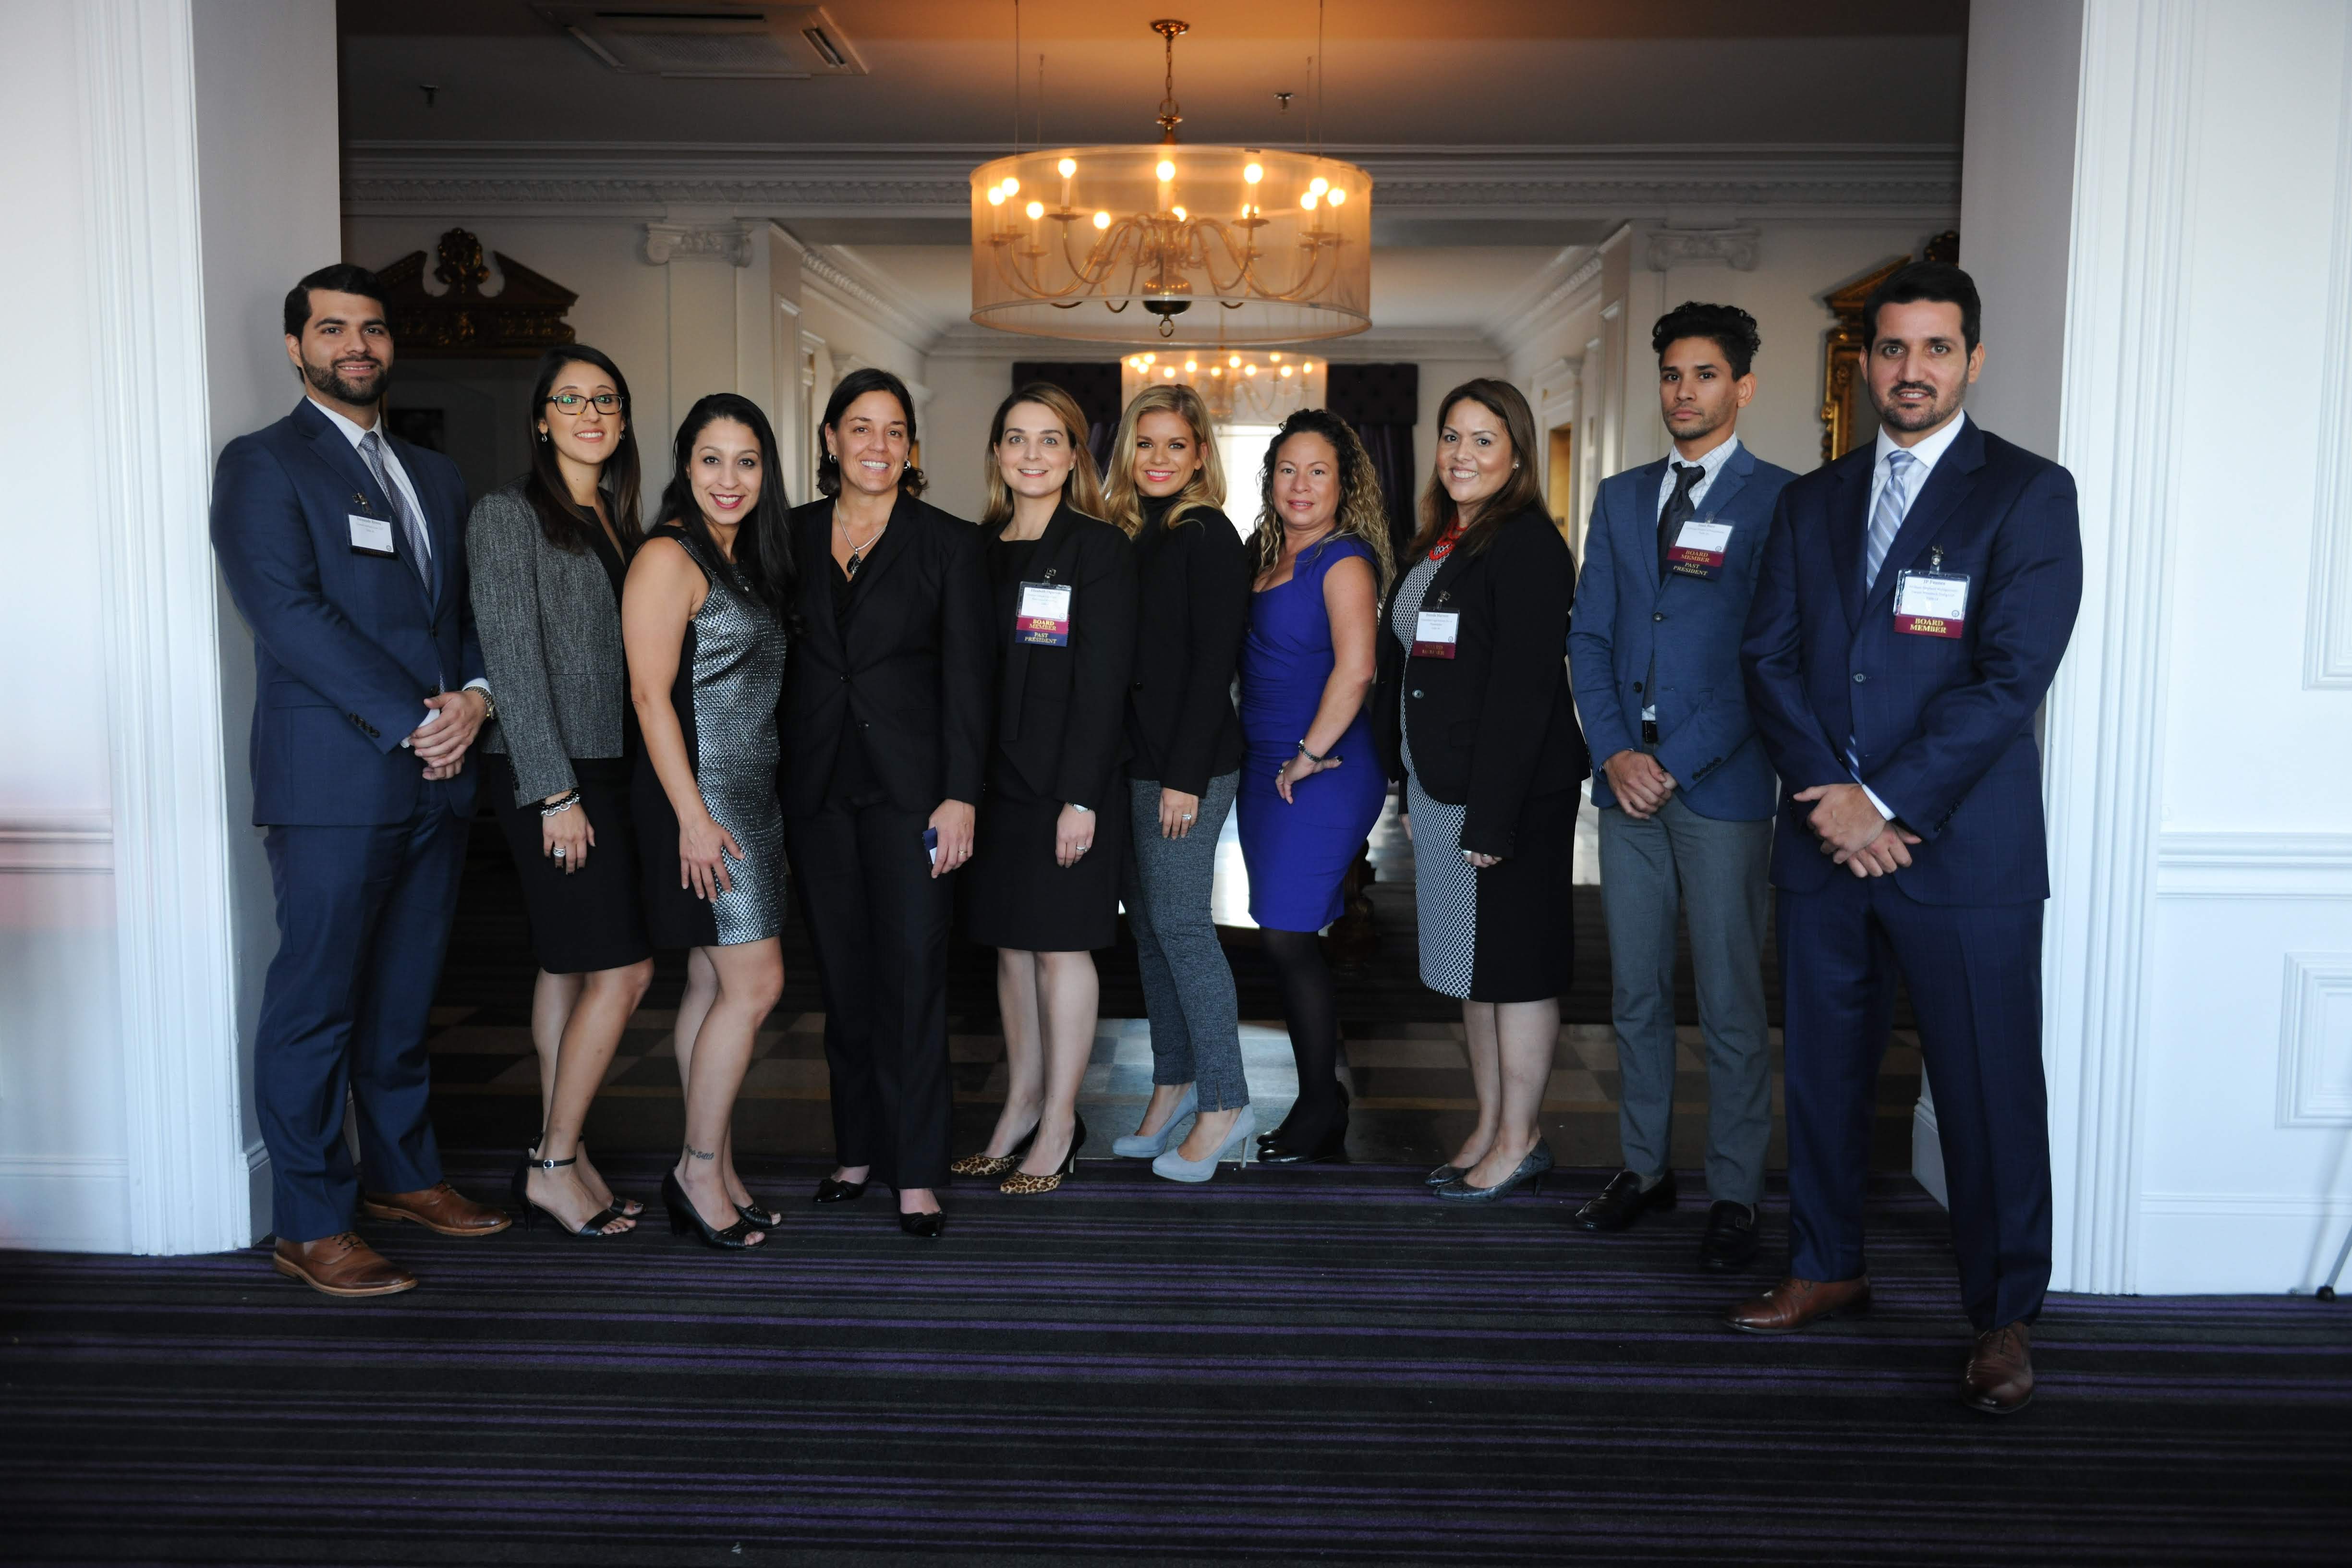 Members of the Hispanic Bar Association of Pennsylvania during the 2018 scholarship dinner event. Photo Courtesy of James P. Faunes/HBAPA